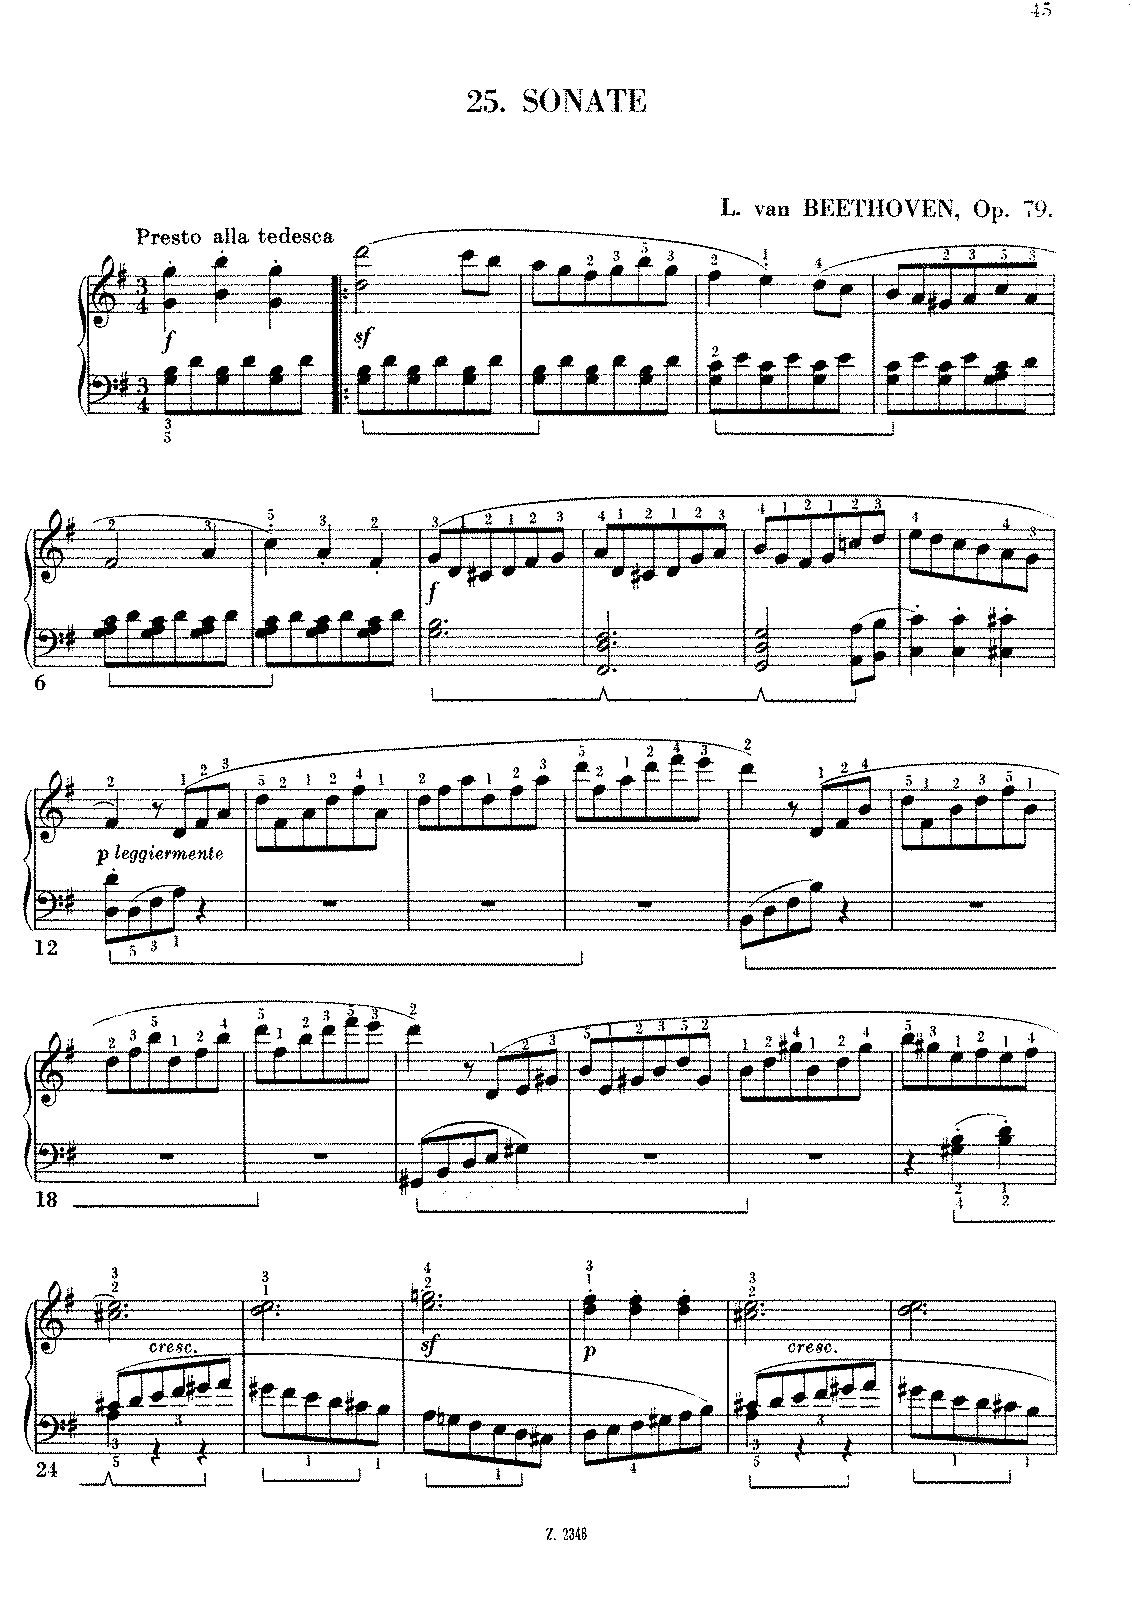 File:PMLP1482-Beethoven.op79.sonata.no25.weiner.pdf